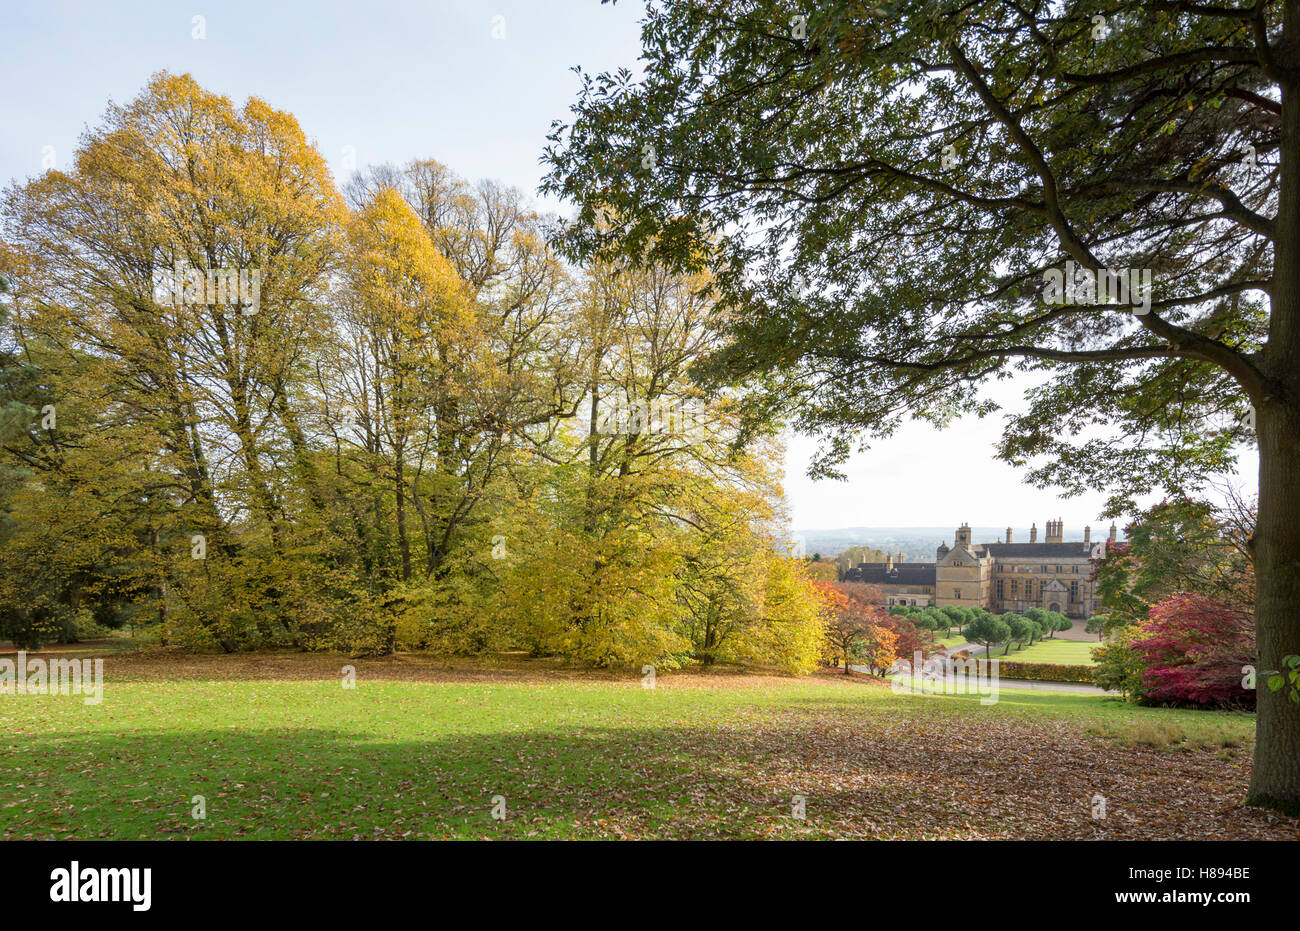 Batsford house and arboretum in autumn, Gloucestershire, England, UK Stock Photo